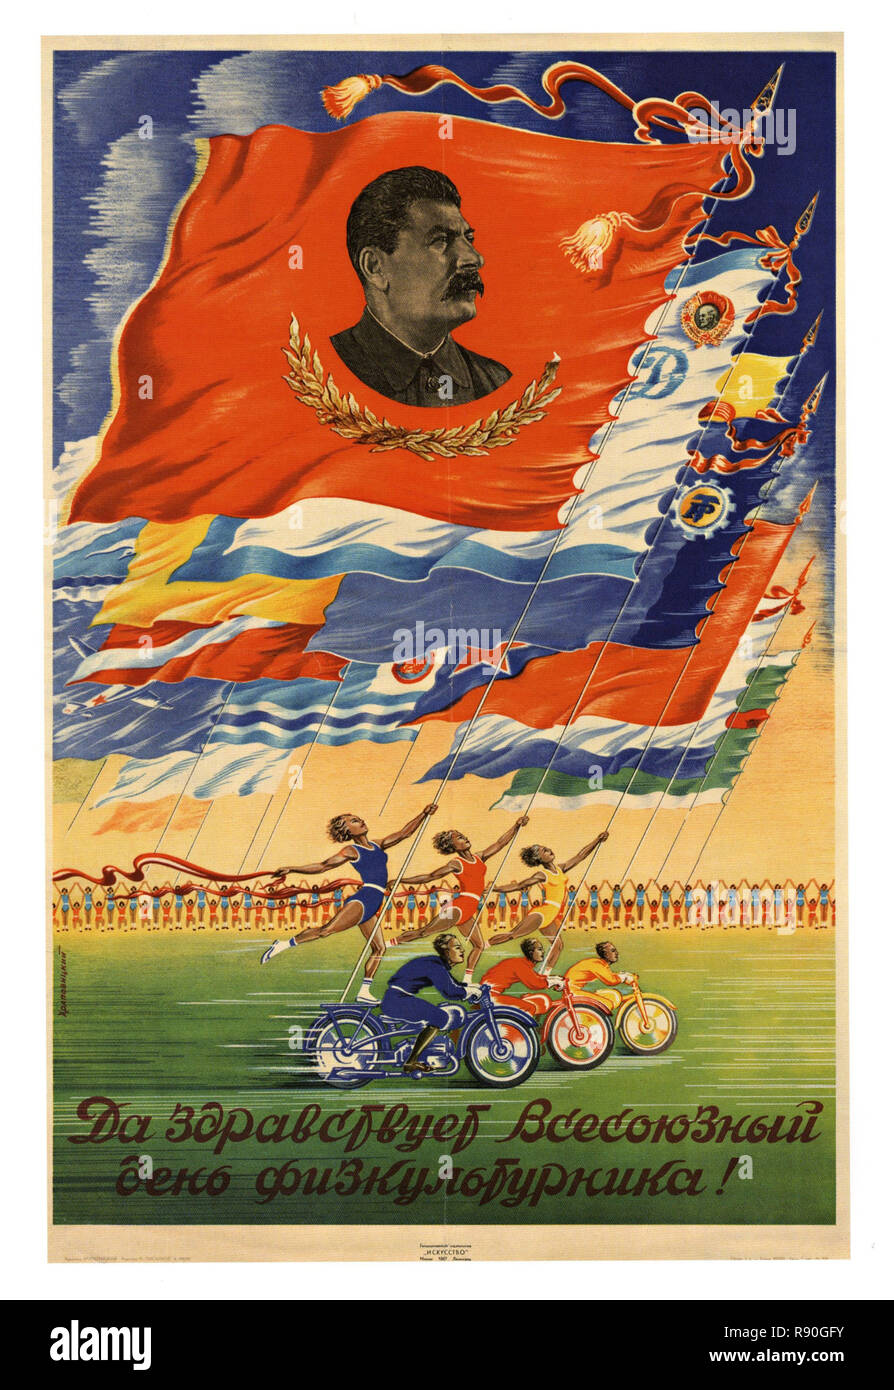 Happy Pan Union Day Of Sportsmen with Stalin - Vintage U.S.S.R Communist Propaganda Poster Stock Photo